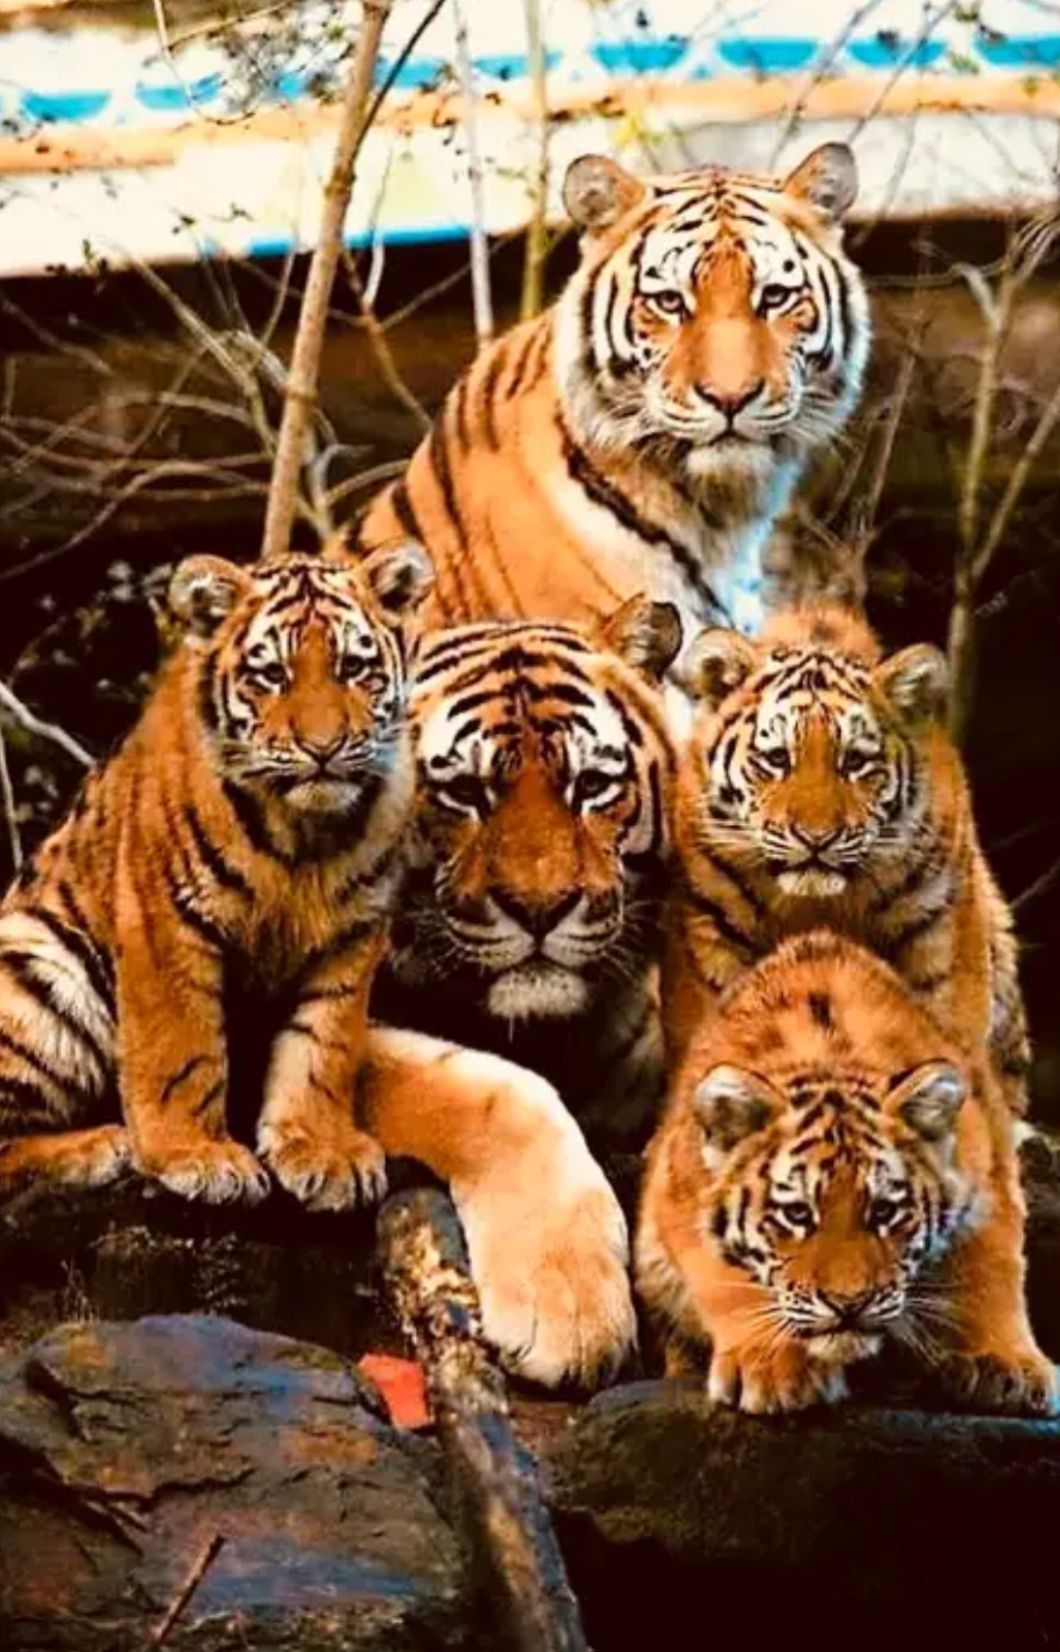 Jajj de cukik tigrisekkk. Tiger picture, Wild cats, Animals wild